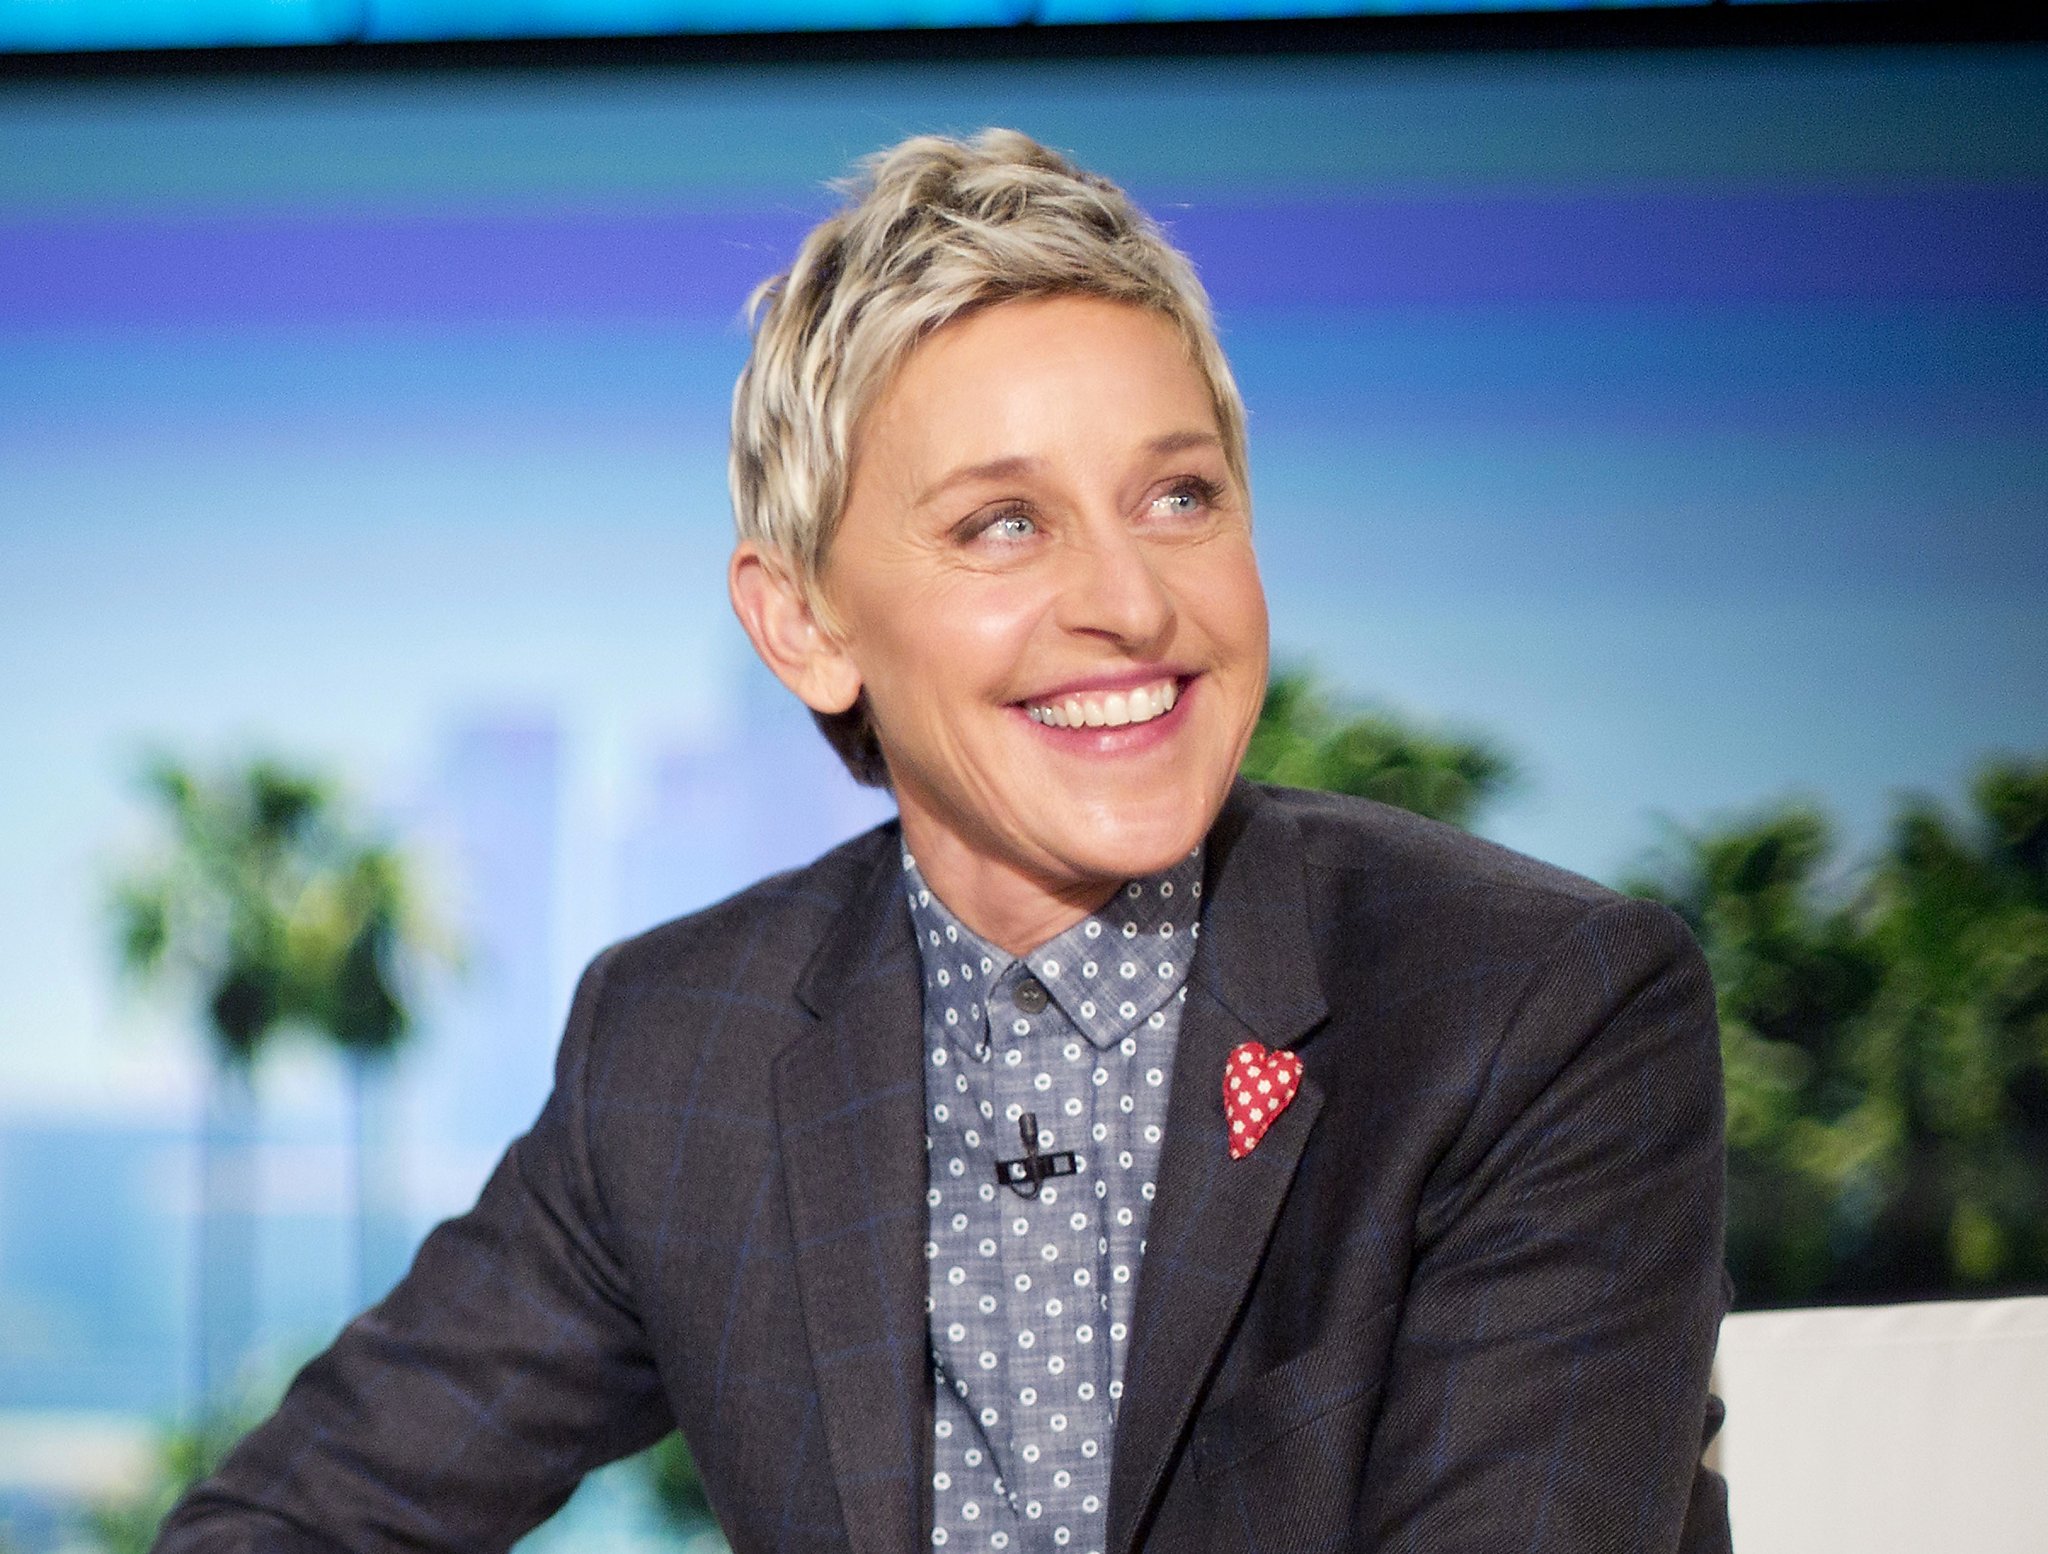 Ellen DeGeneres jokes about the California drought on Twitter.